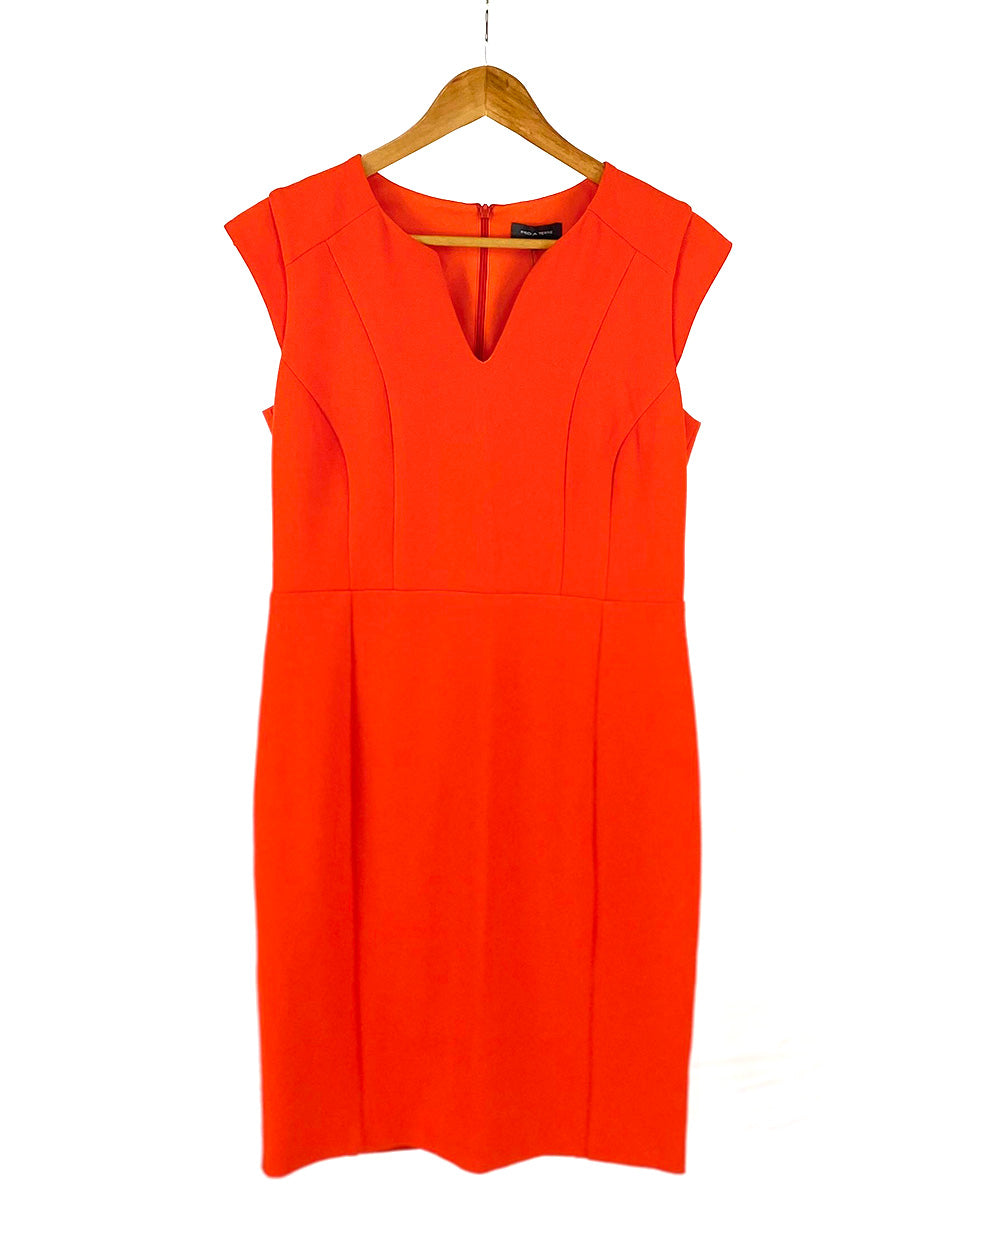 Pied A Terra Orange Fitted Dress UK 12